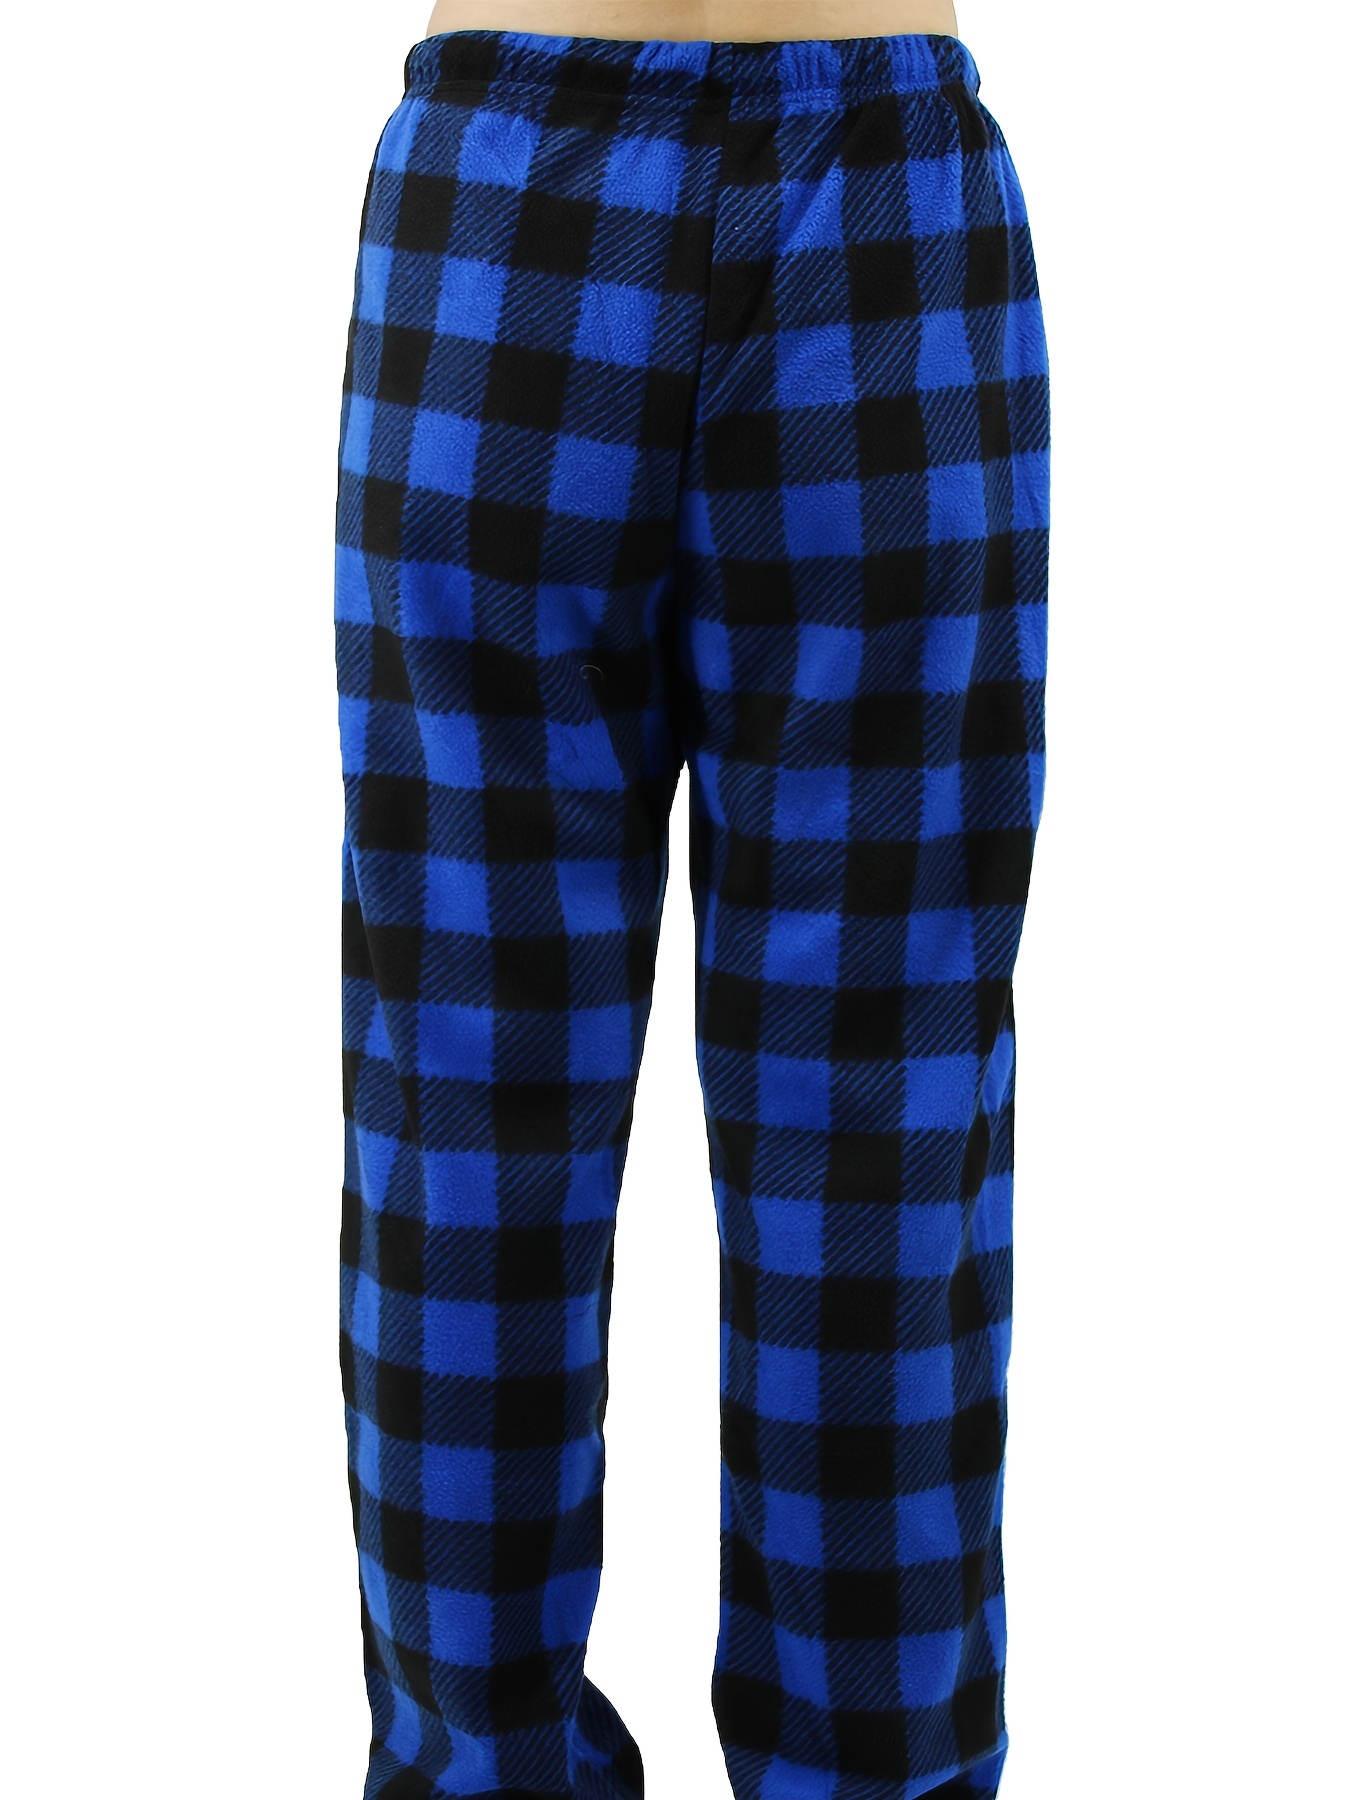 Plaid Pajama Pants - Black